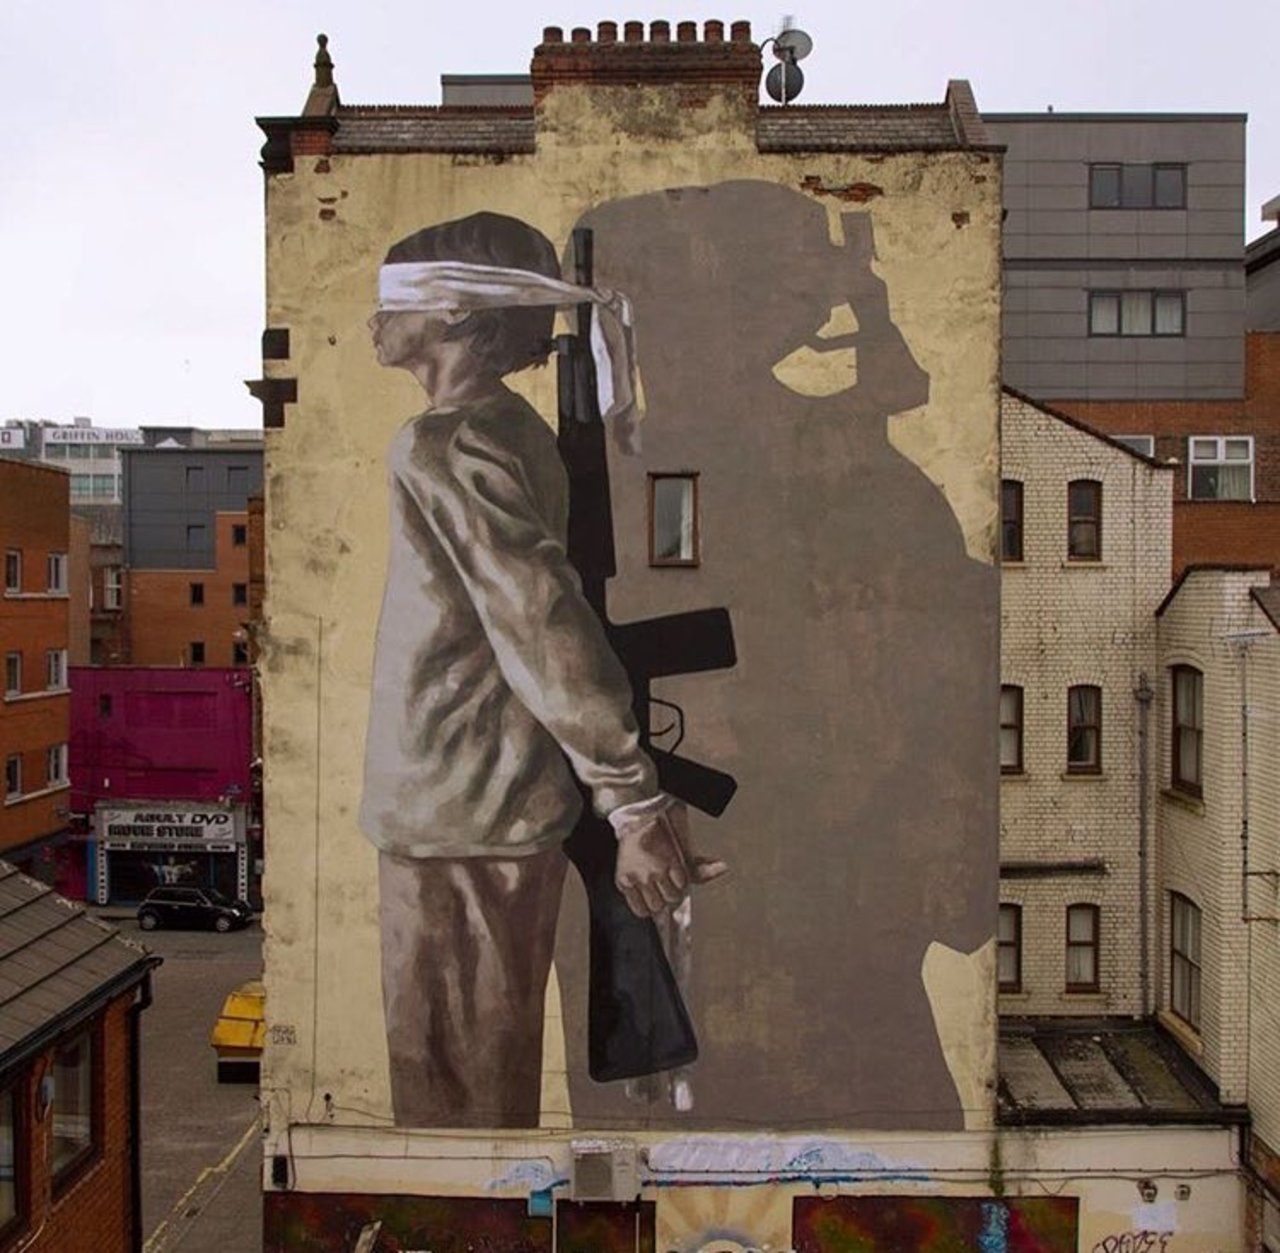 ¨War impact in children lives¨ Urban art by Hyuro in Manchester, England https://t.co/AwW1vBywHN #streetart #mural #graffiti #art